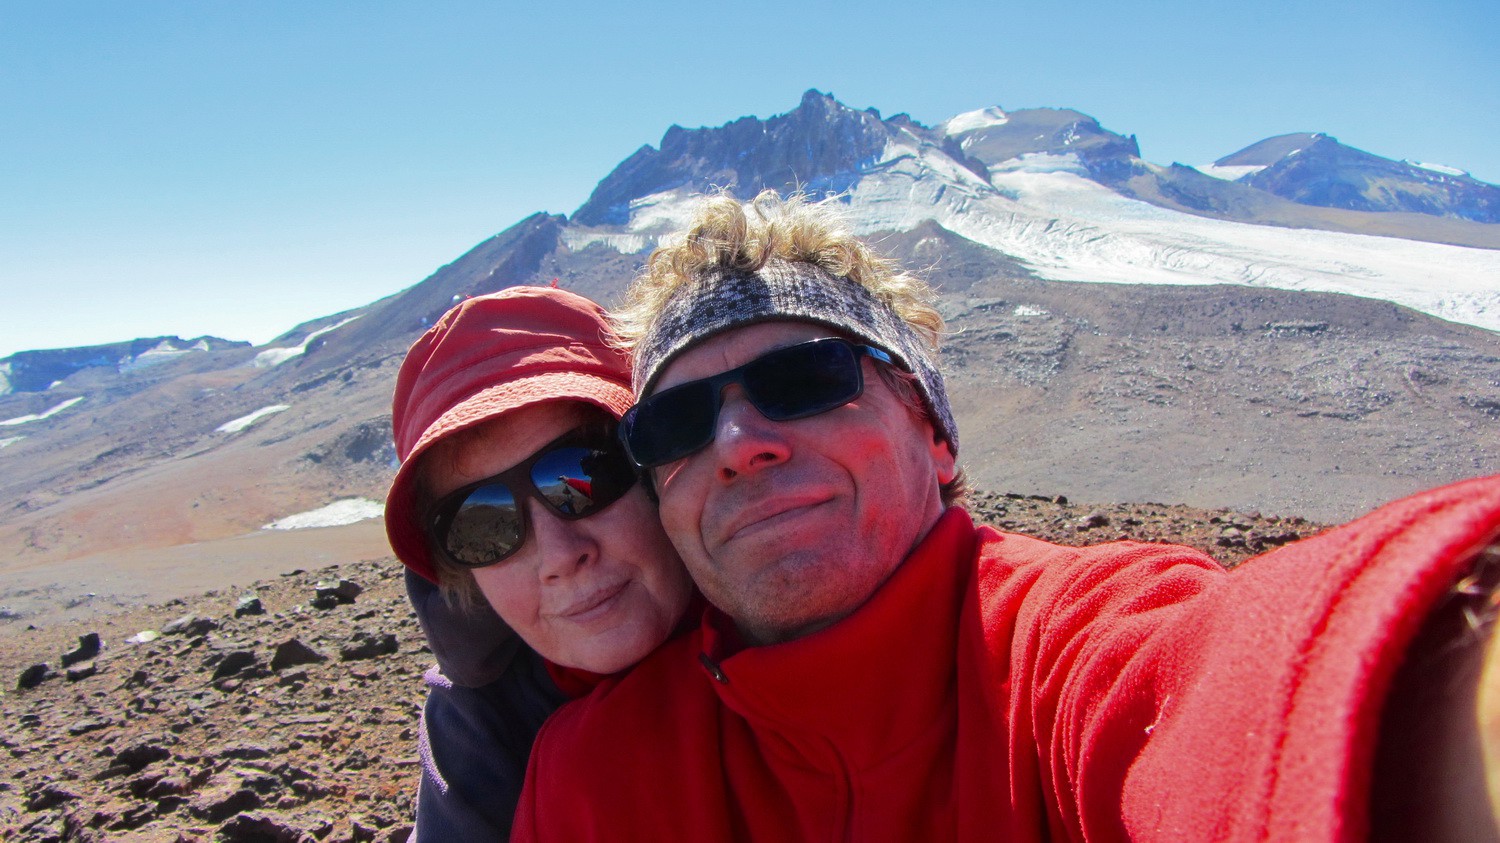 On the summit of Volcan Tinguiririca Chico